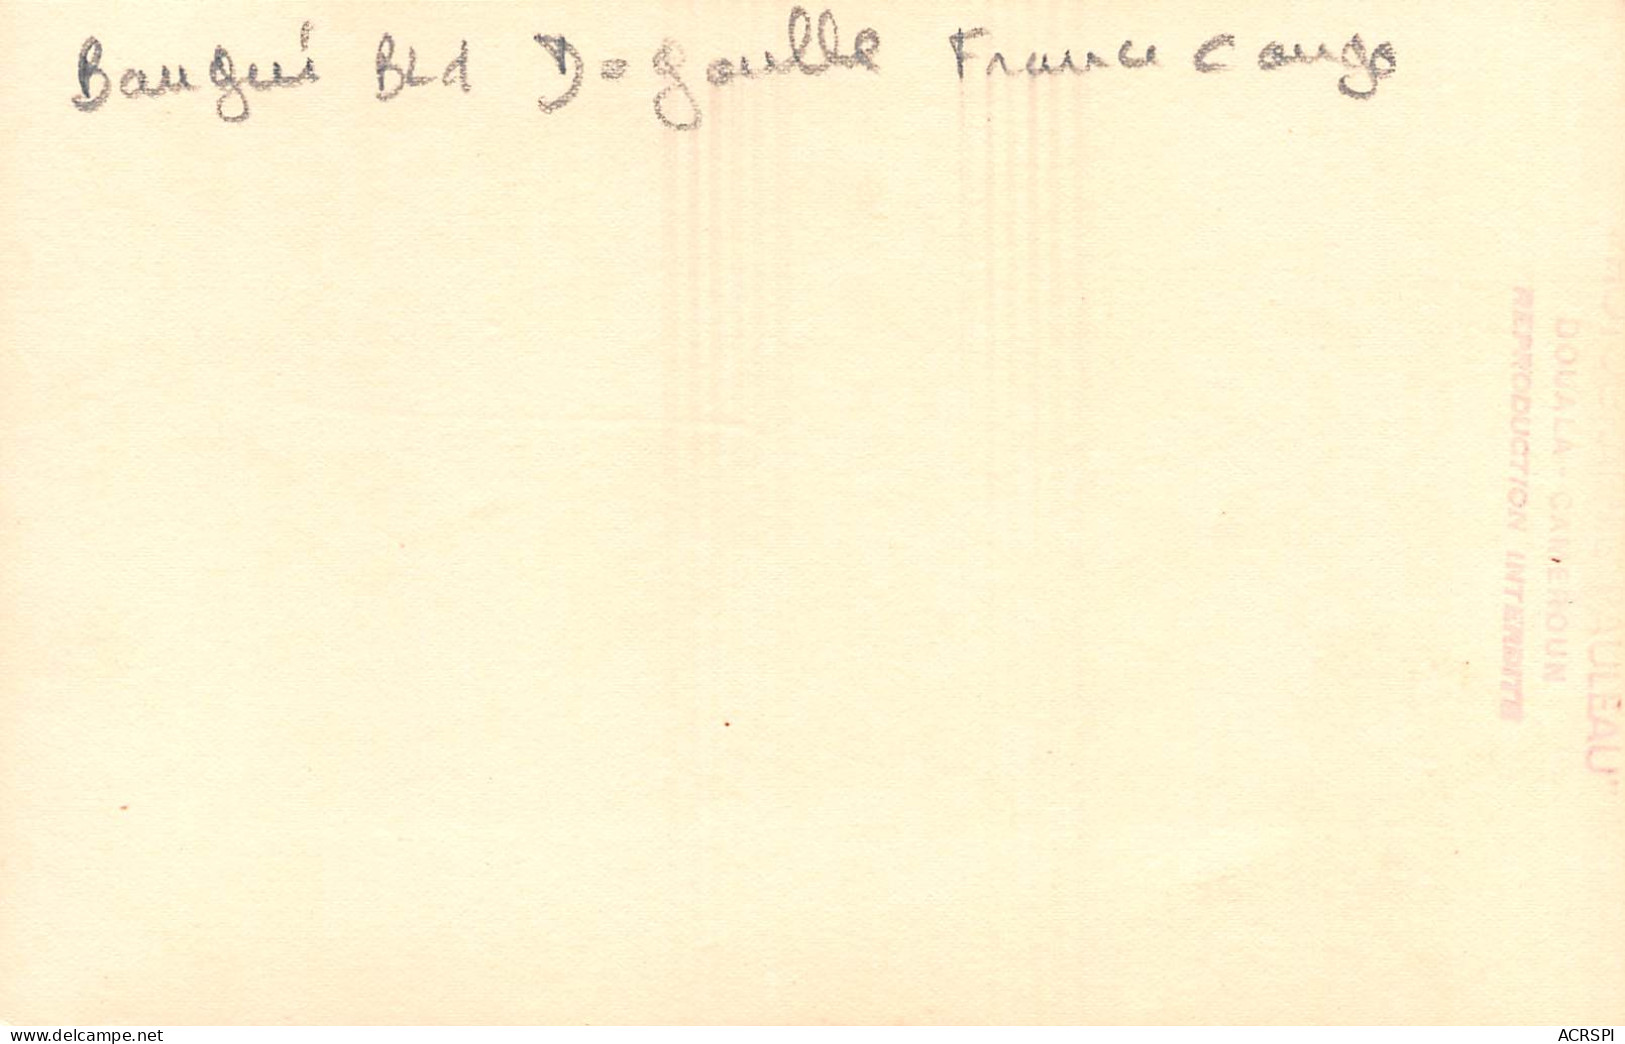 BANGUI République Centrafricaine France Congo Bld De Gaulle Photo PAULEA Non Circulé (Scan R/V) N° 53 \MP7121 - Central African Republic